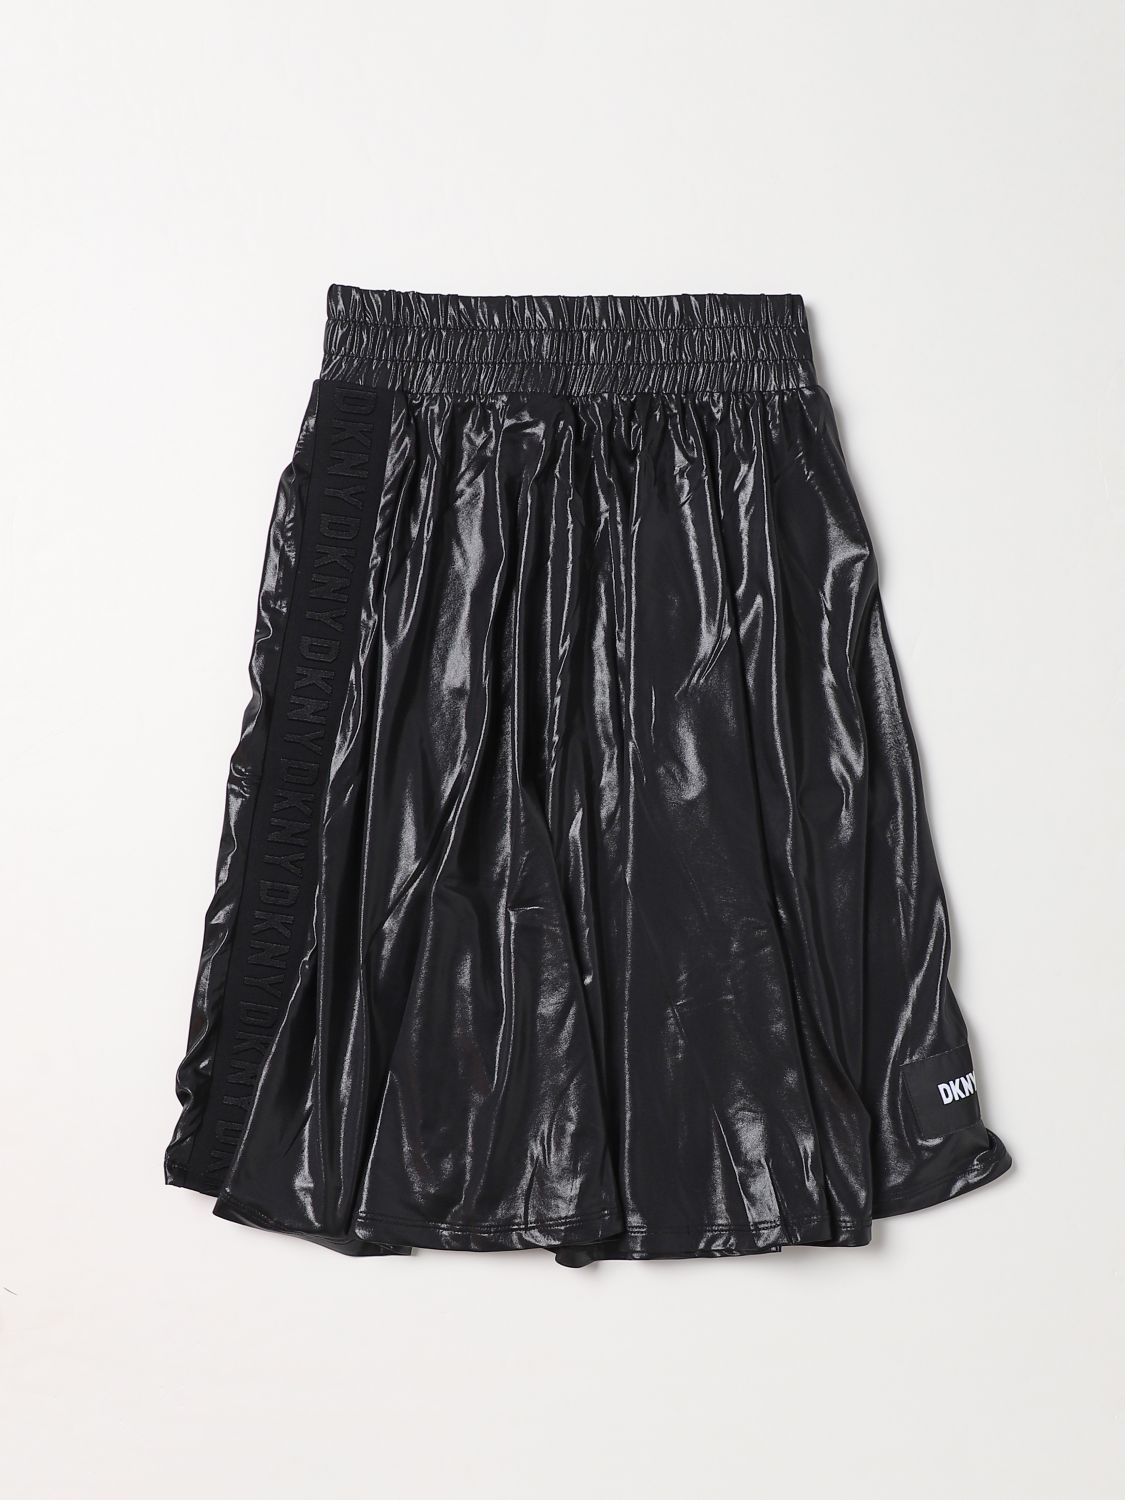 Dkny Kids fringed logo-trim skirt - Black